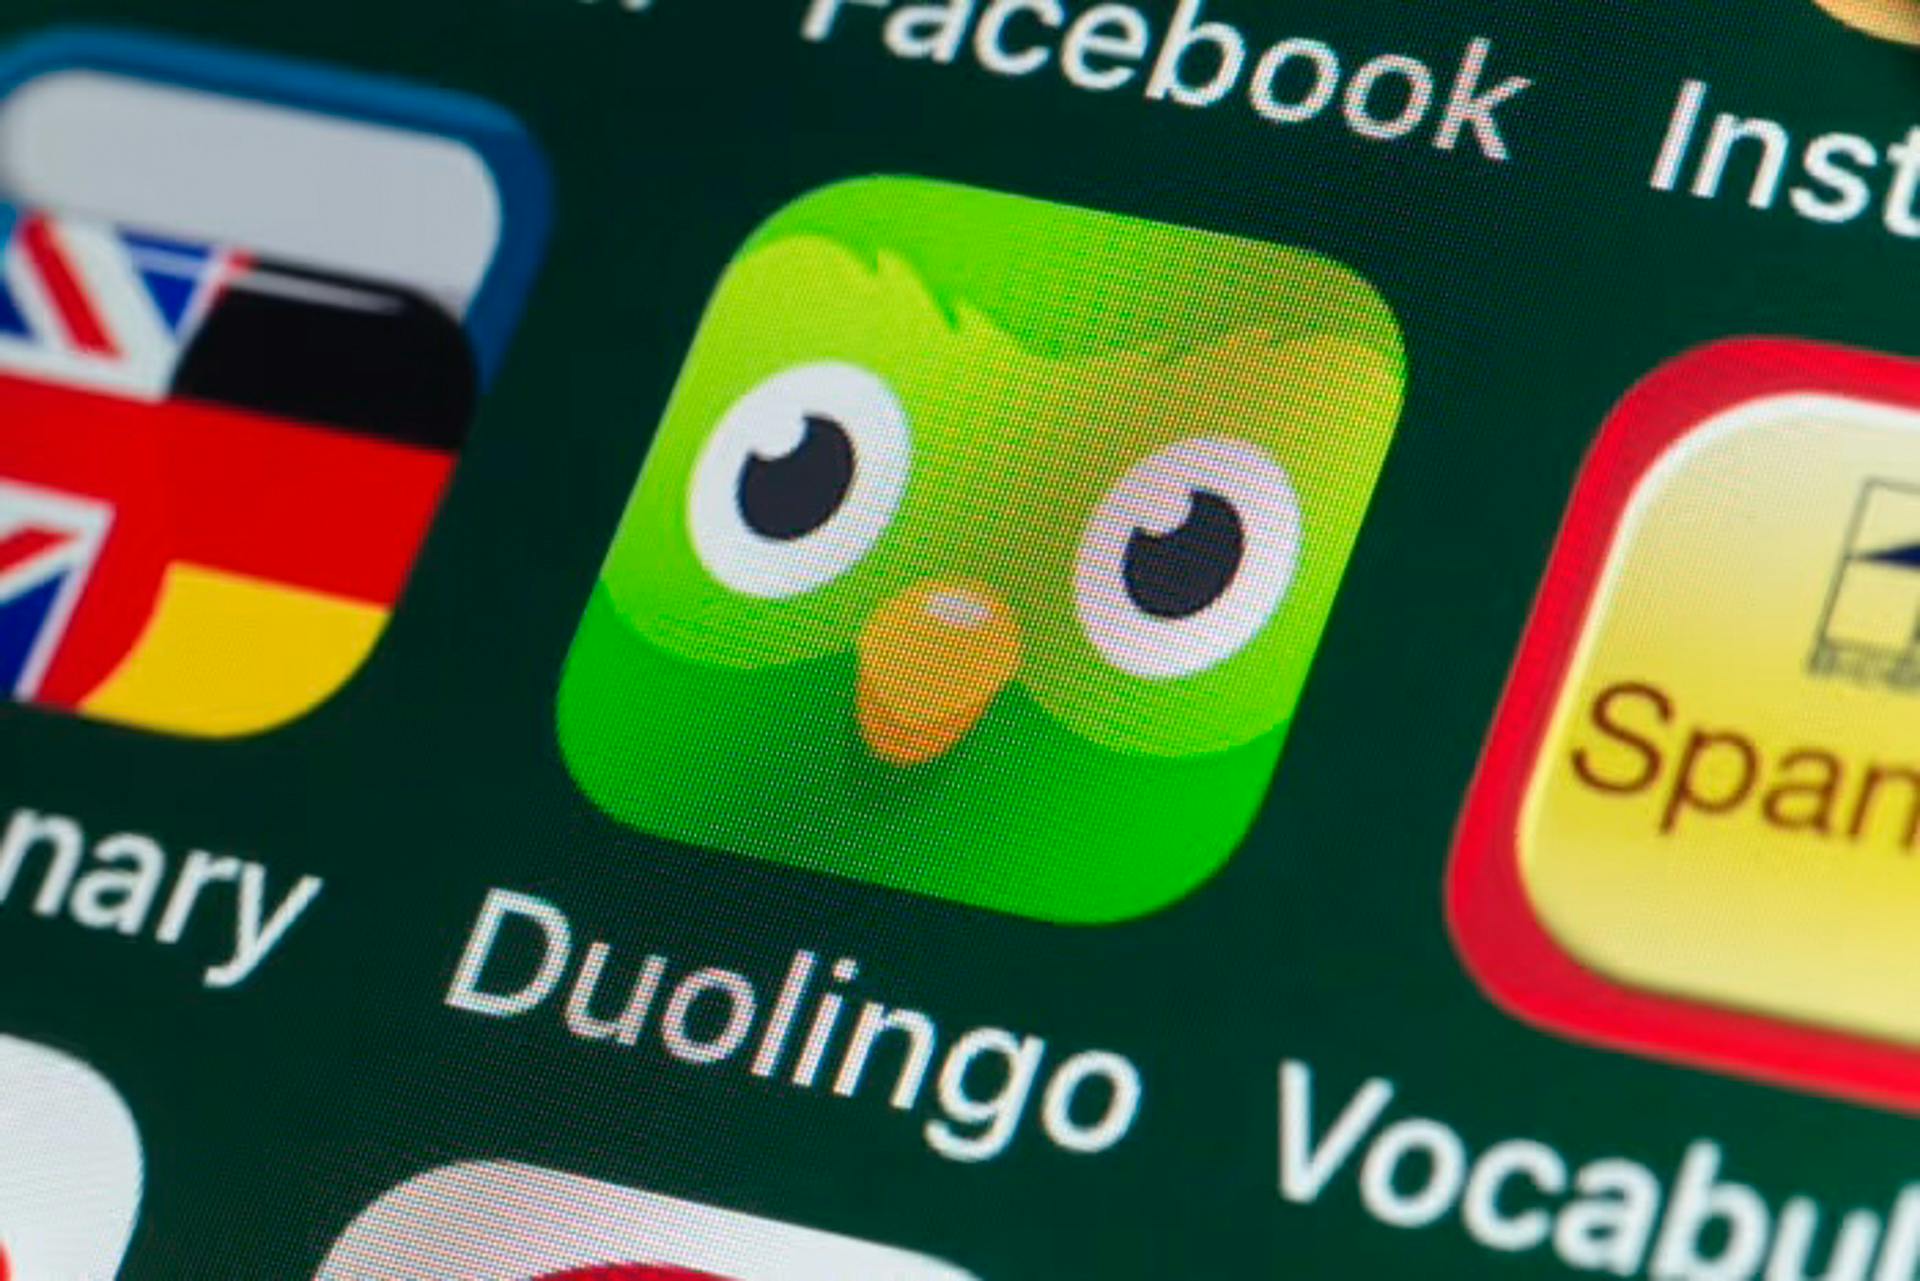 Duolingo Removes LGBT Content